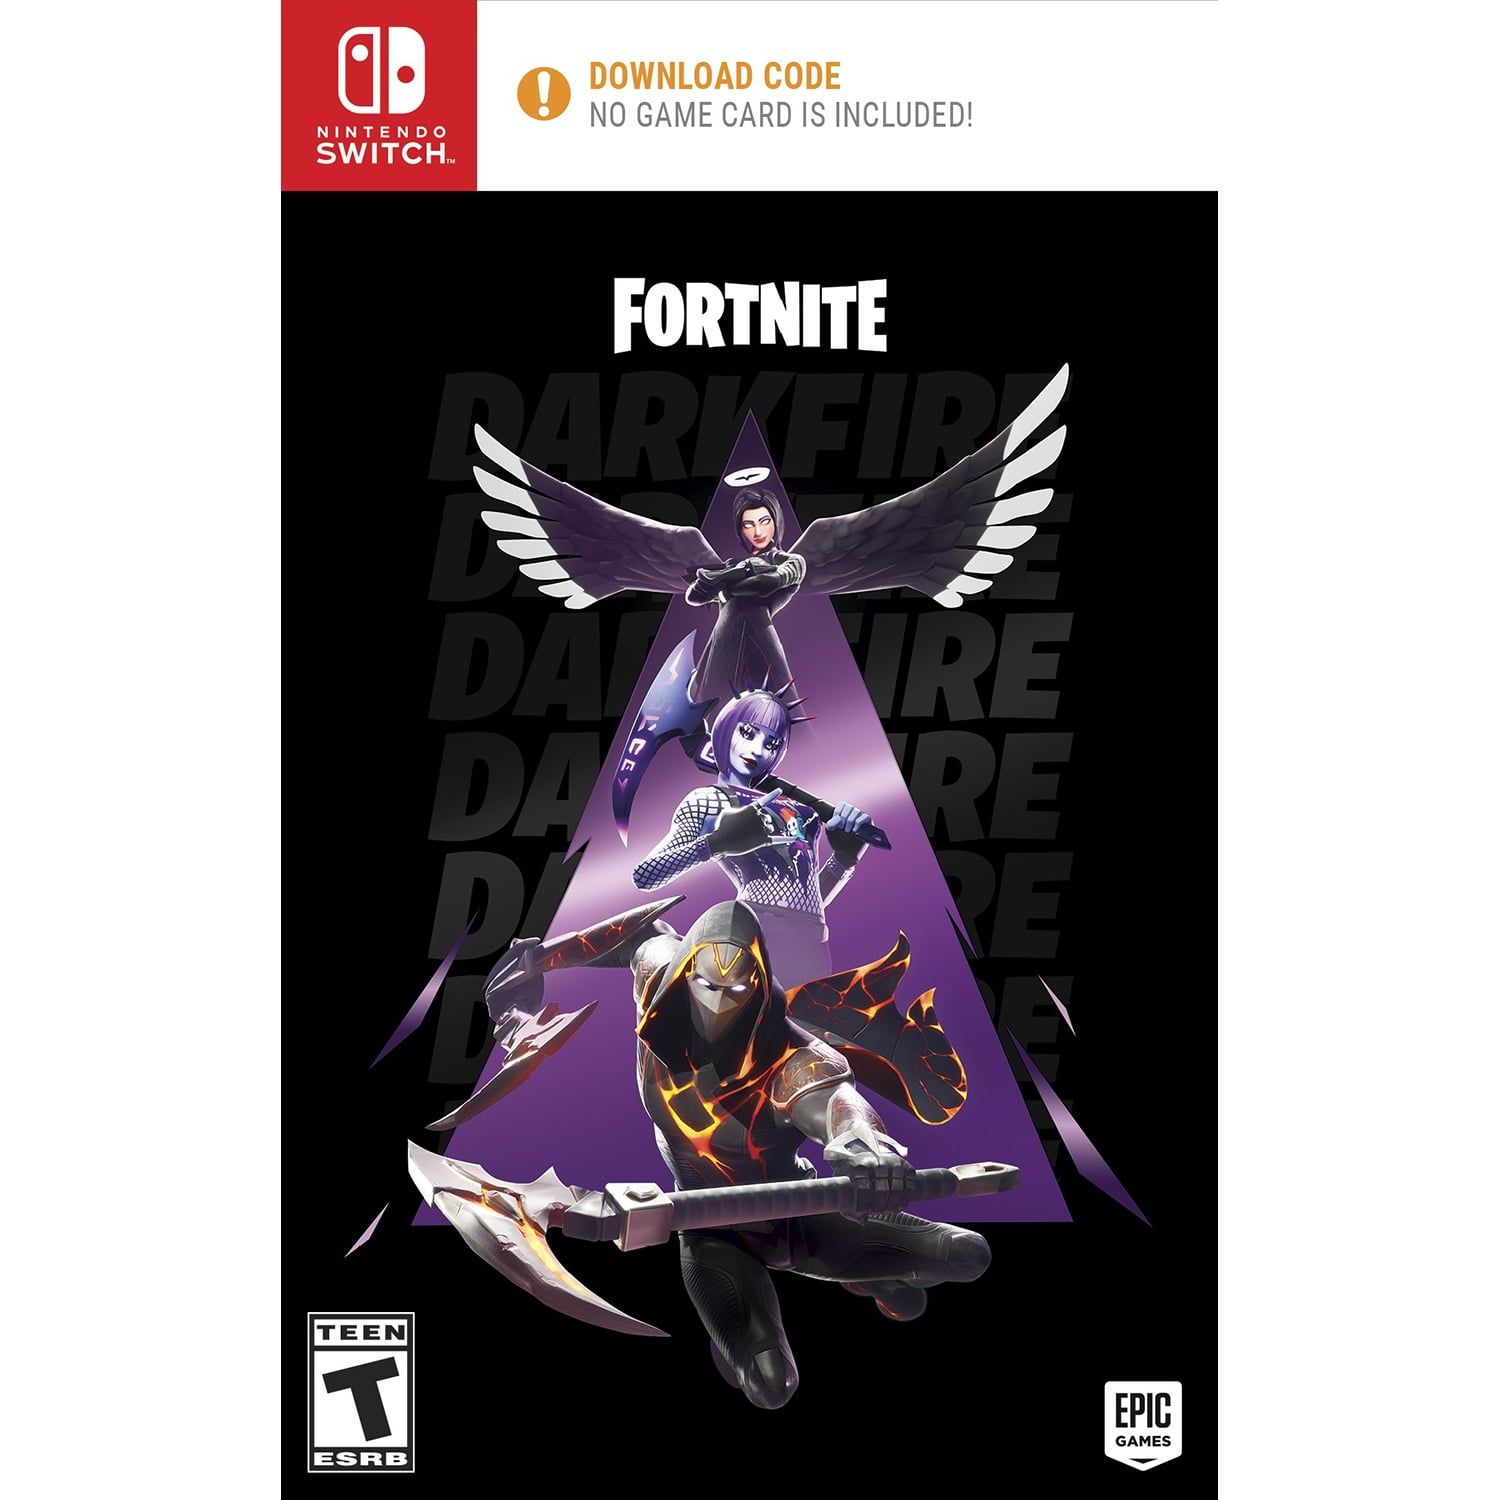 Fortnite Darkfire Bundle Warner Home Video Games Nintendo Switch 883929694372 Walmart Com Walmart Com